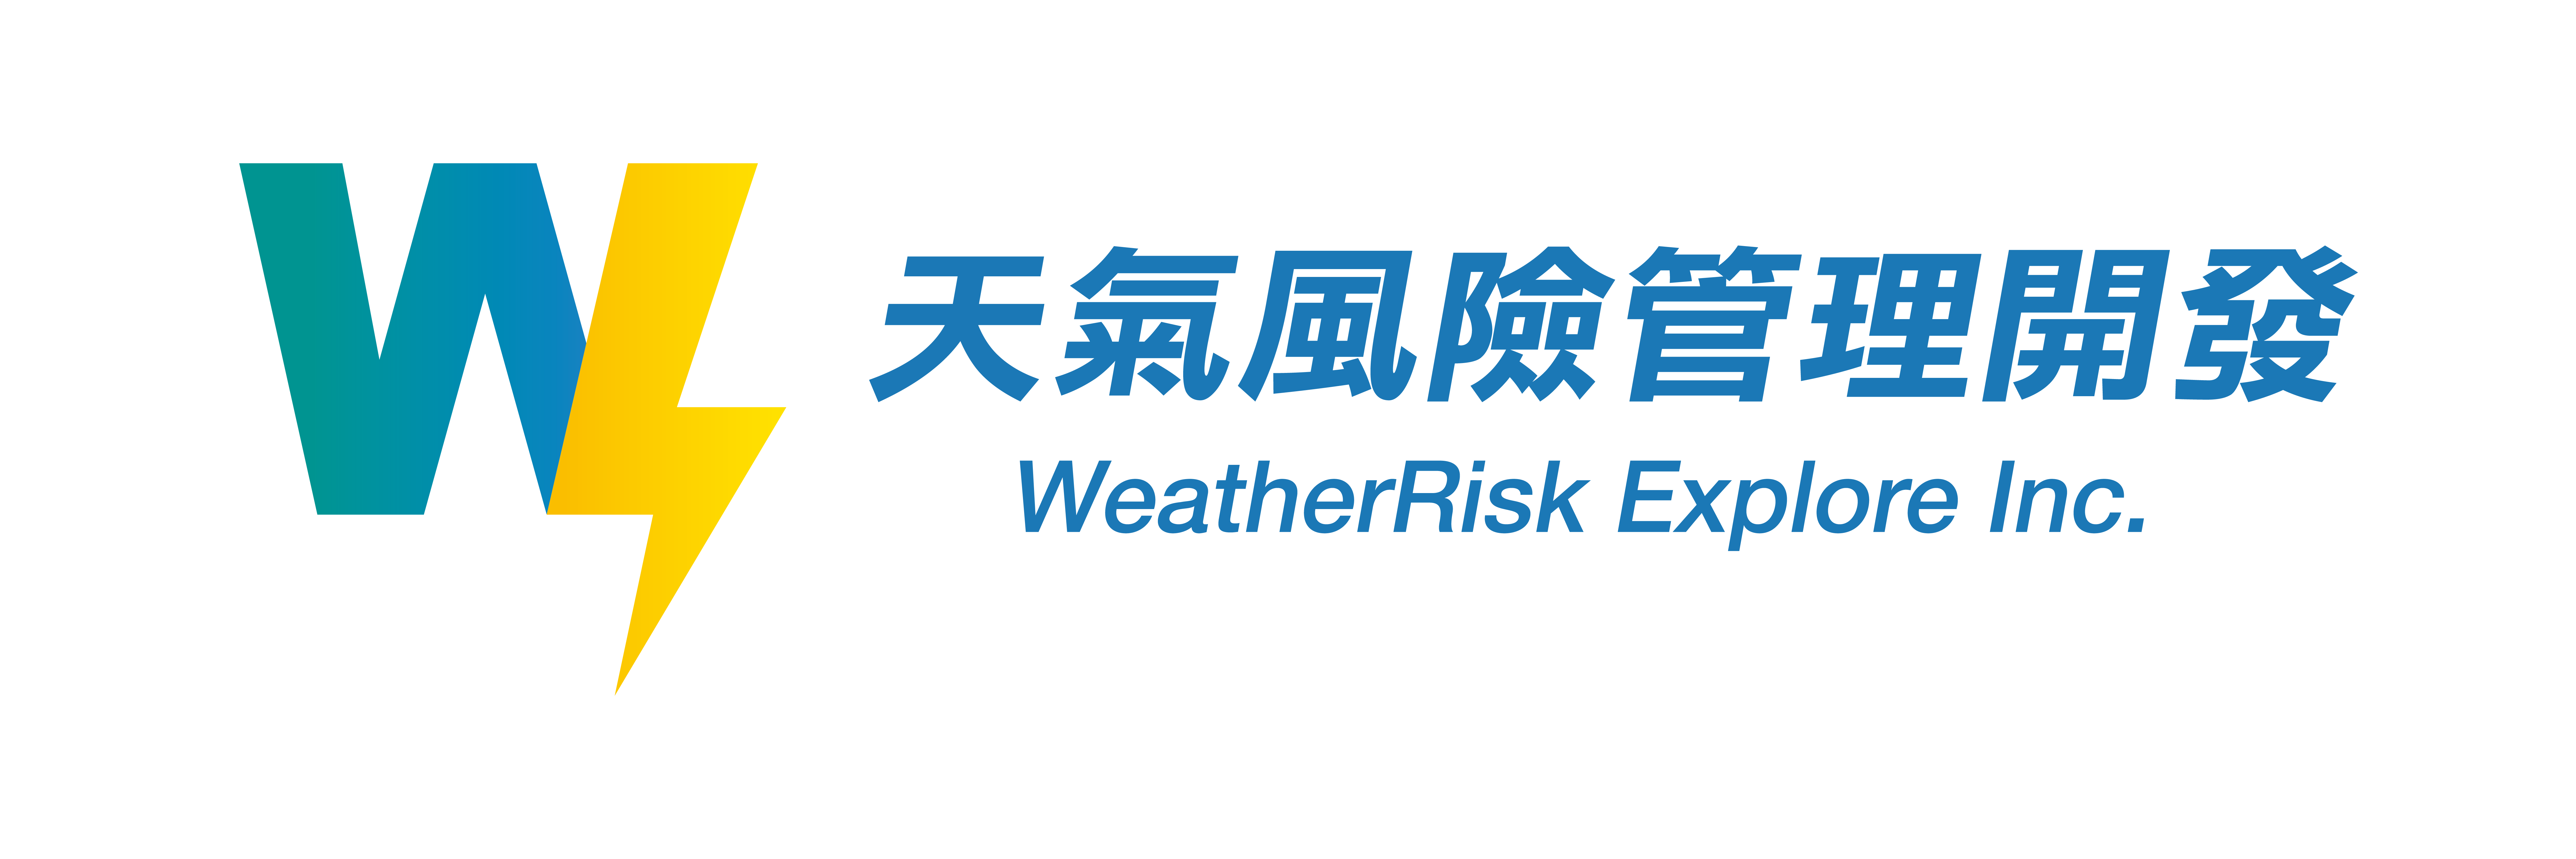 WeatherRisk Explore